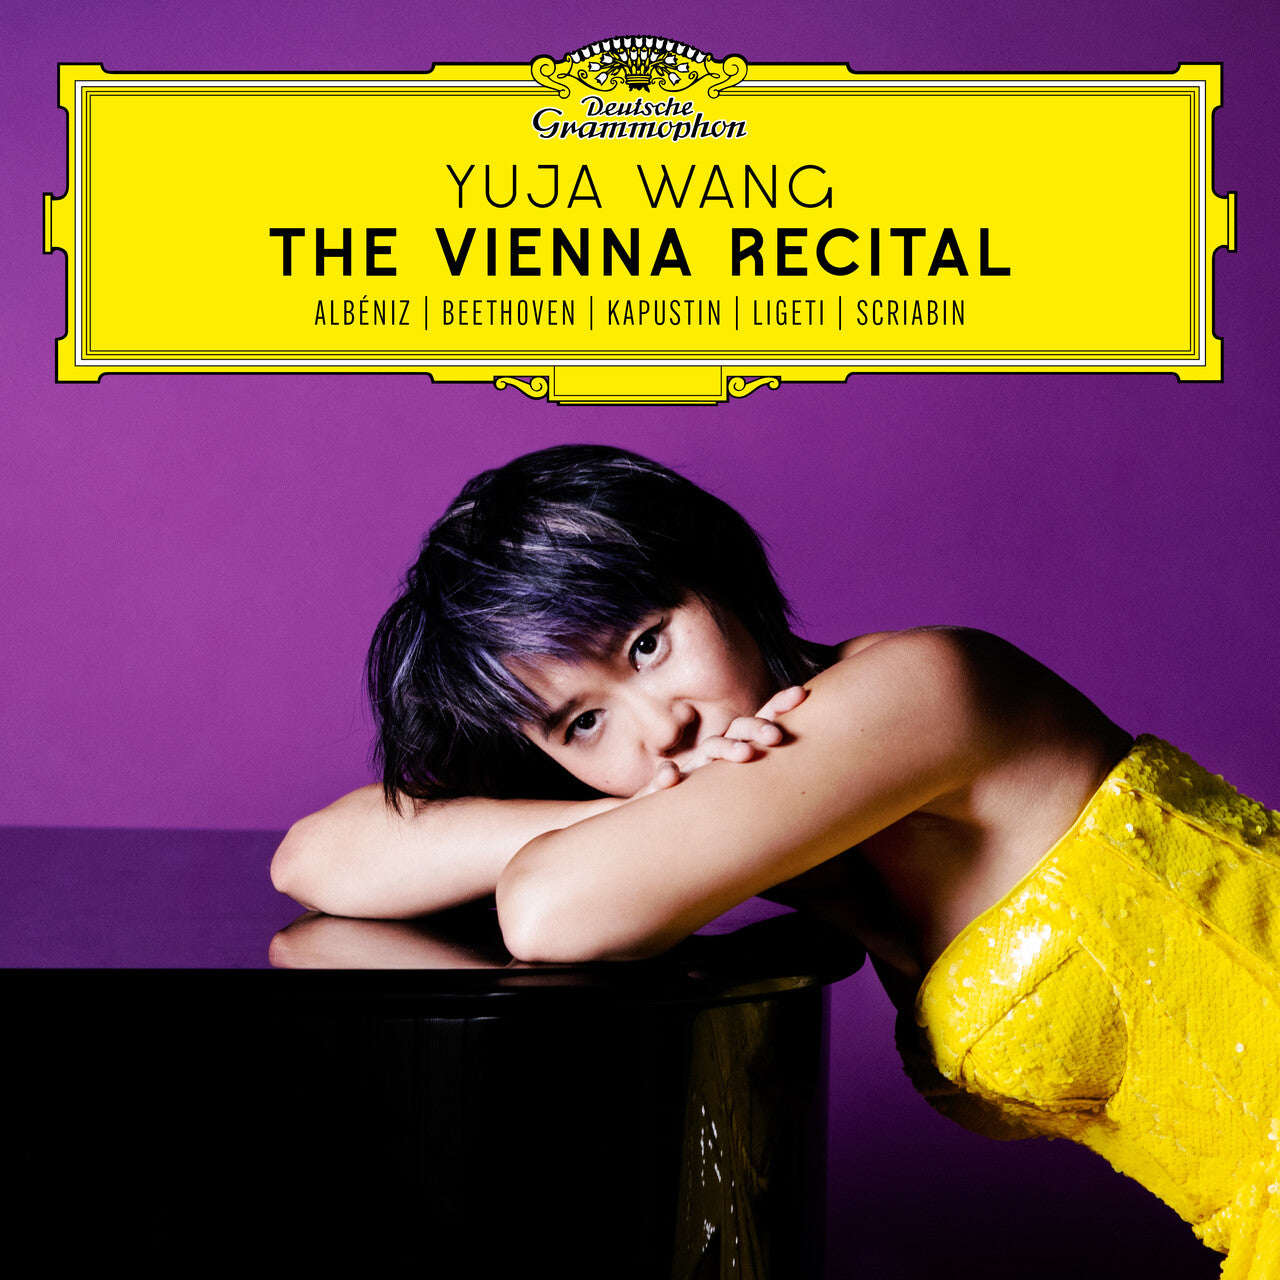 Yuja Wang - The Vienna Recital: Colour Vinyl 2LP